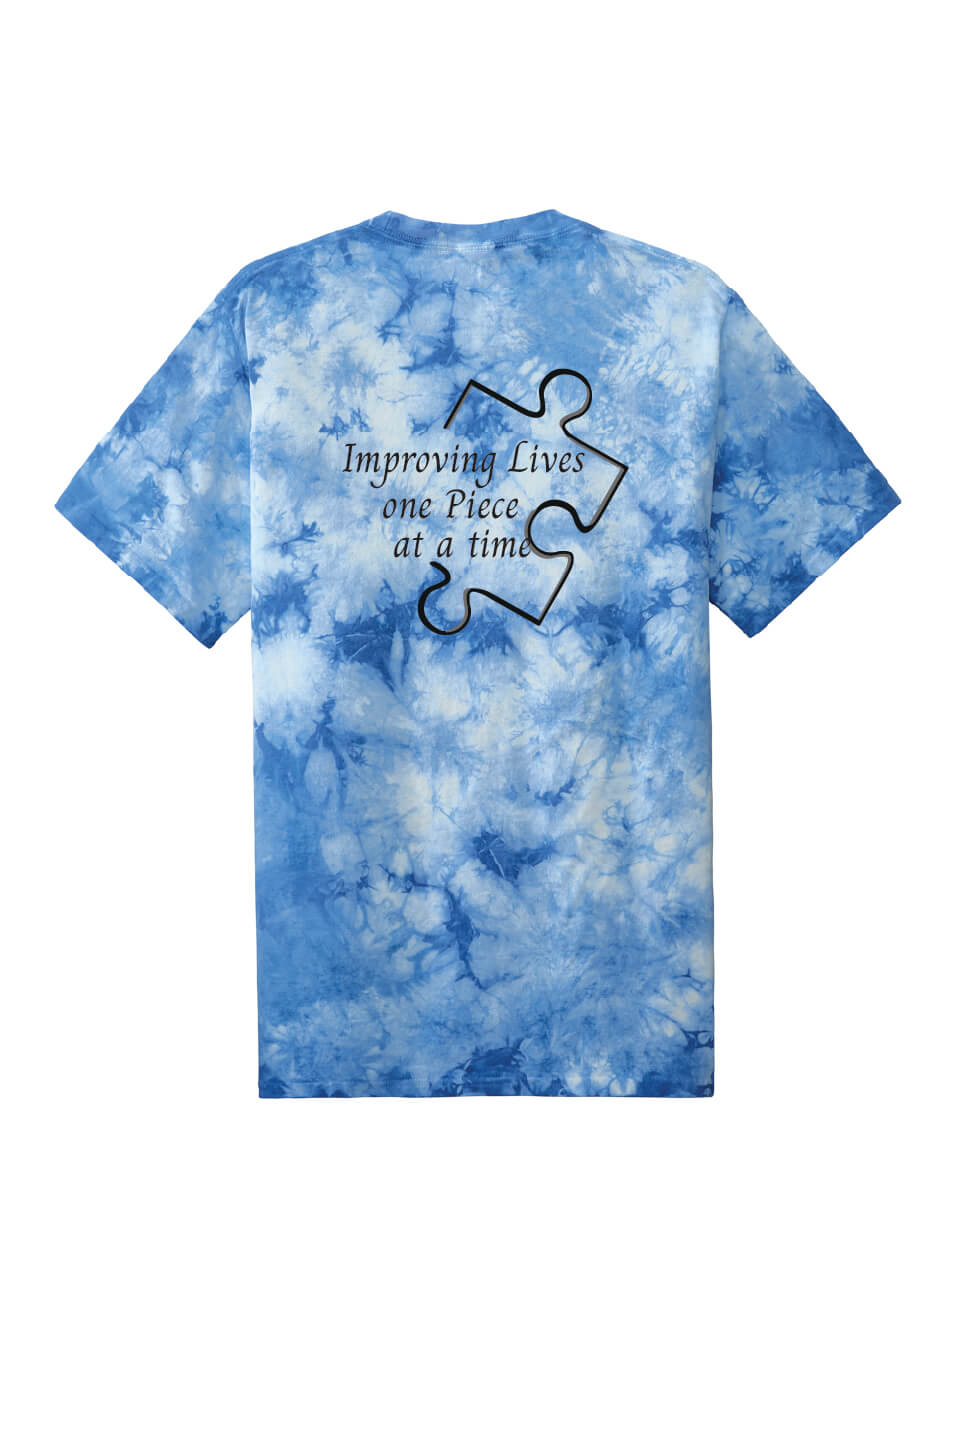 Tie Dye Short Sleeve T-Shirt Crystal Sky Blue back